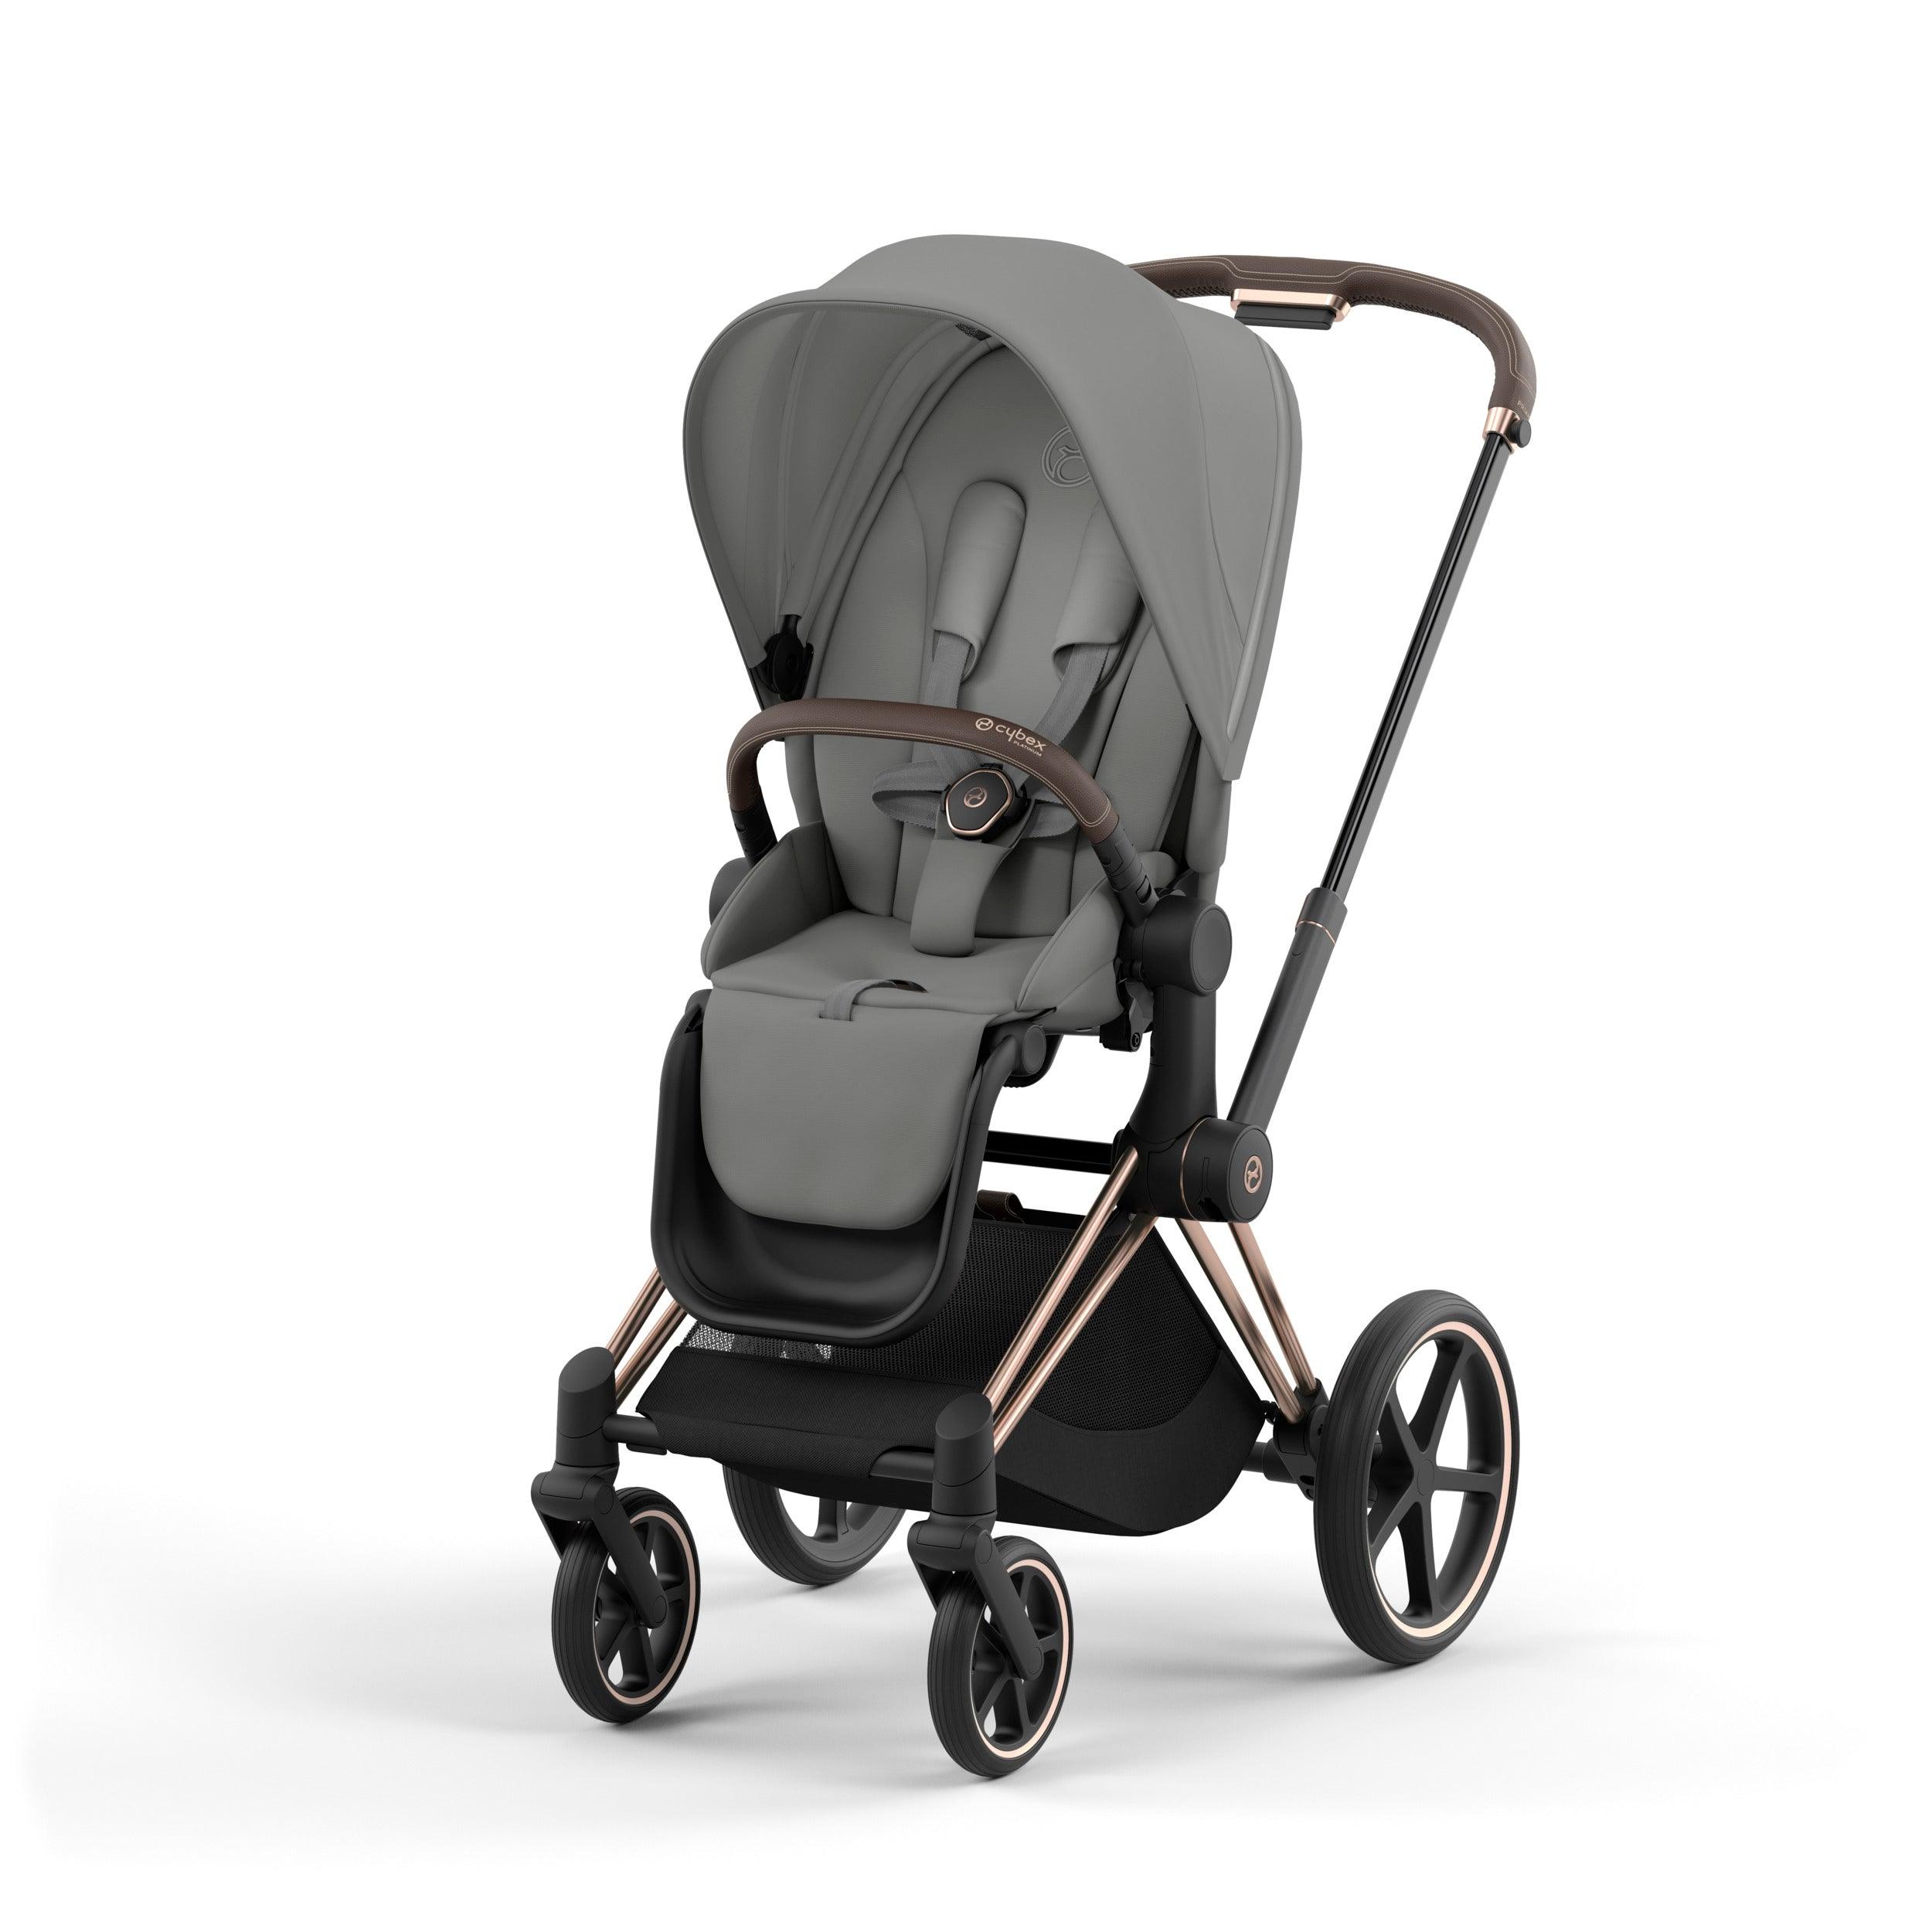 CYBEX Priam Baby Stroller in Mirage Grey & Rosegold Frame